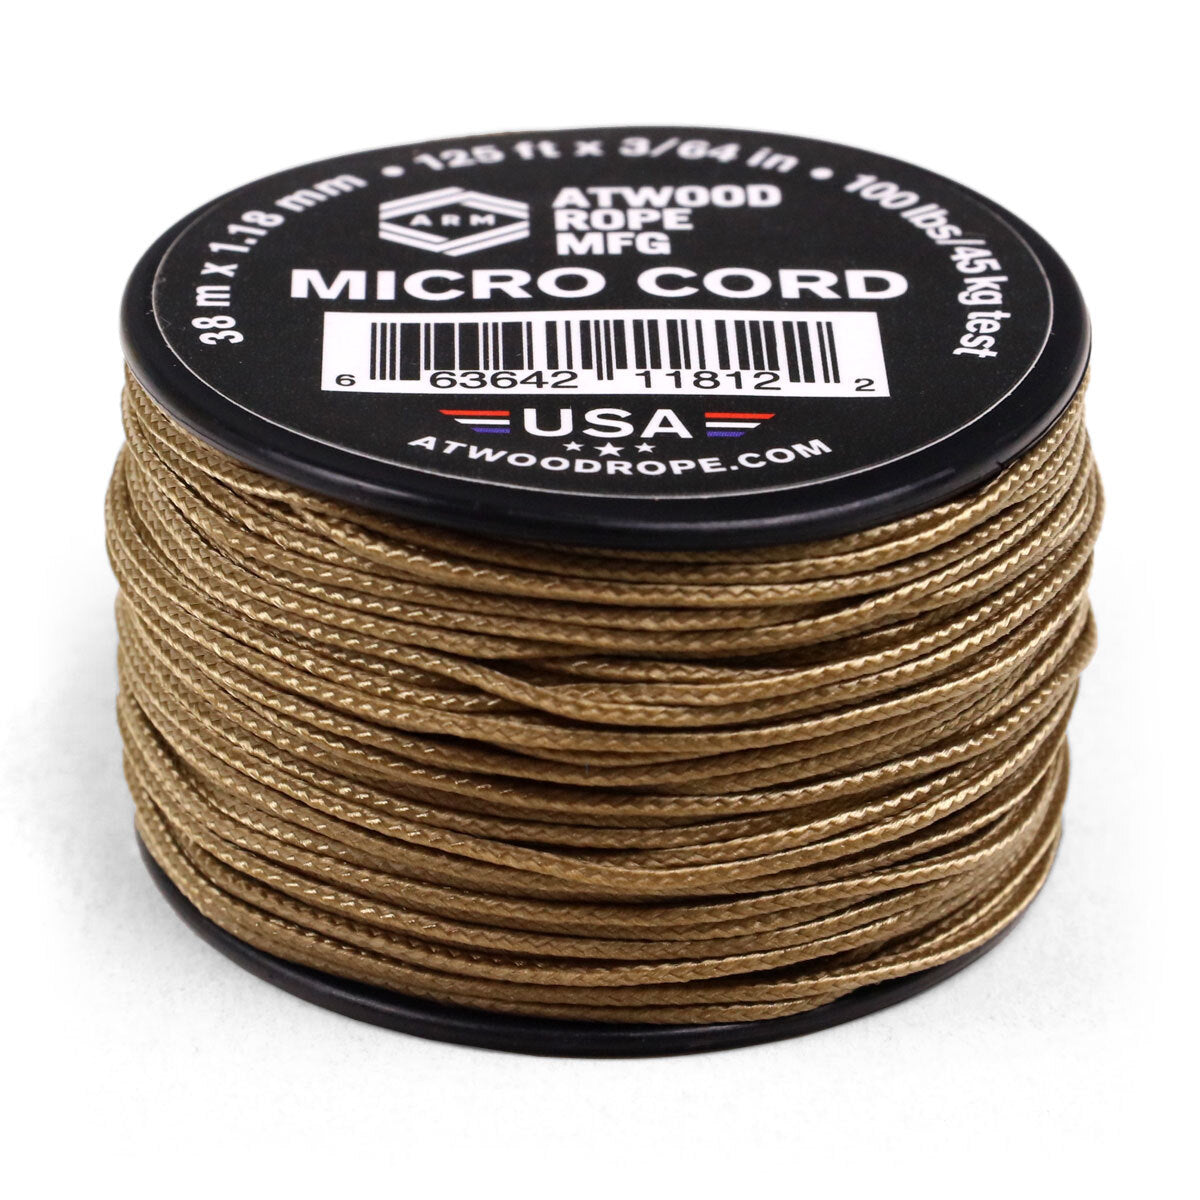 1.18mm Micro Cord - Tan – Atwood Rope MFG